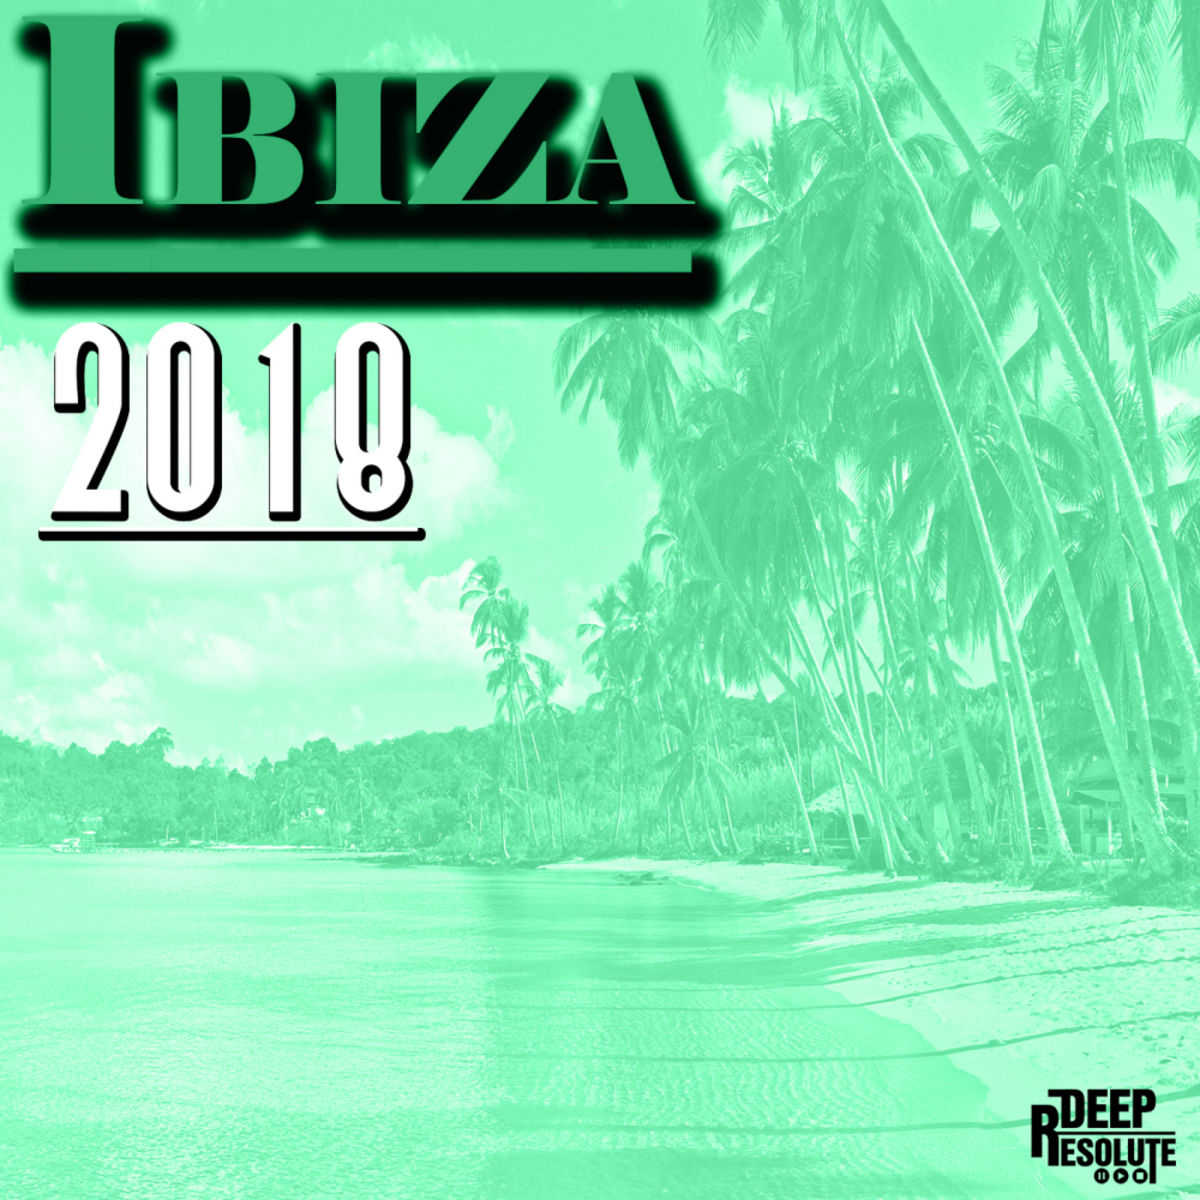 VA - Ibiza 2018 / Deep Resolute (Pty) Ltd